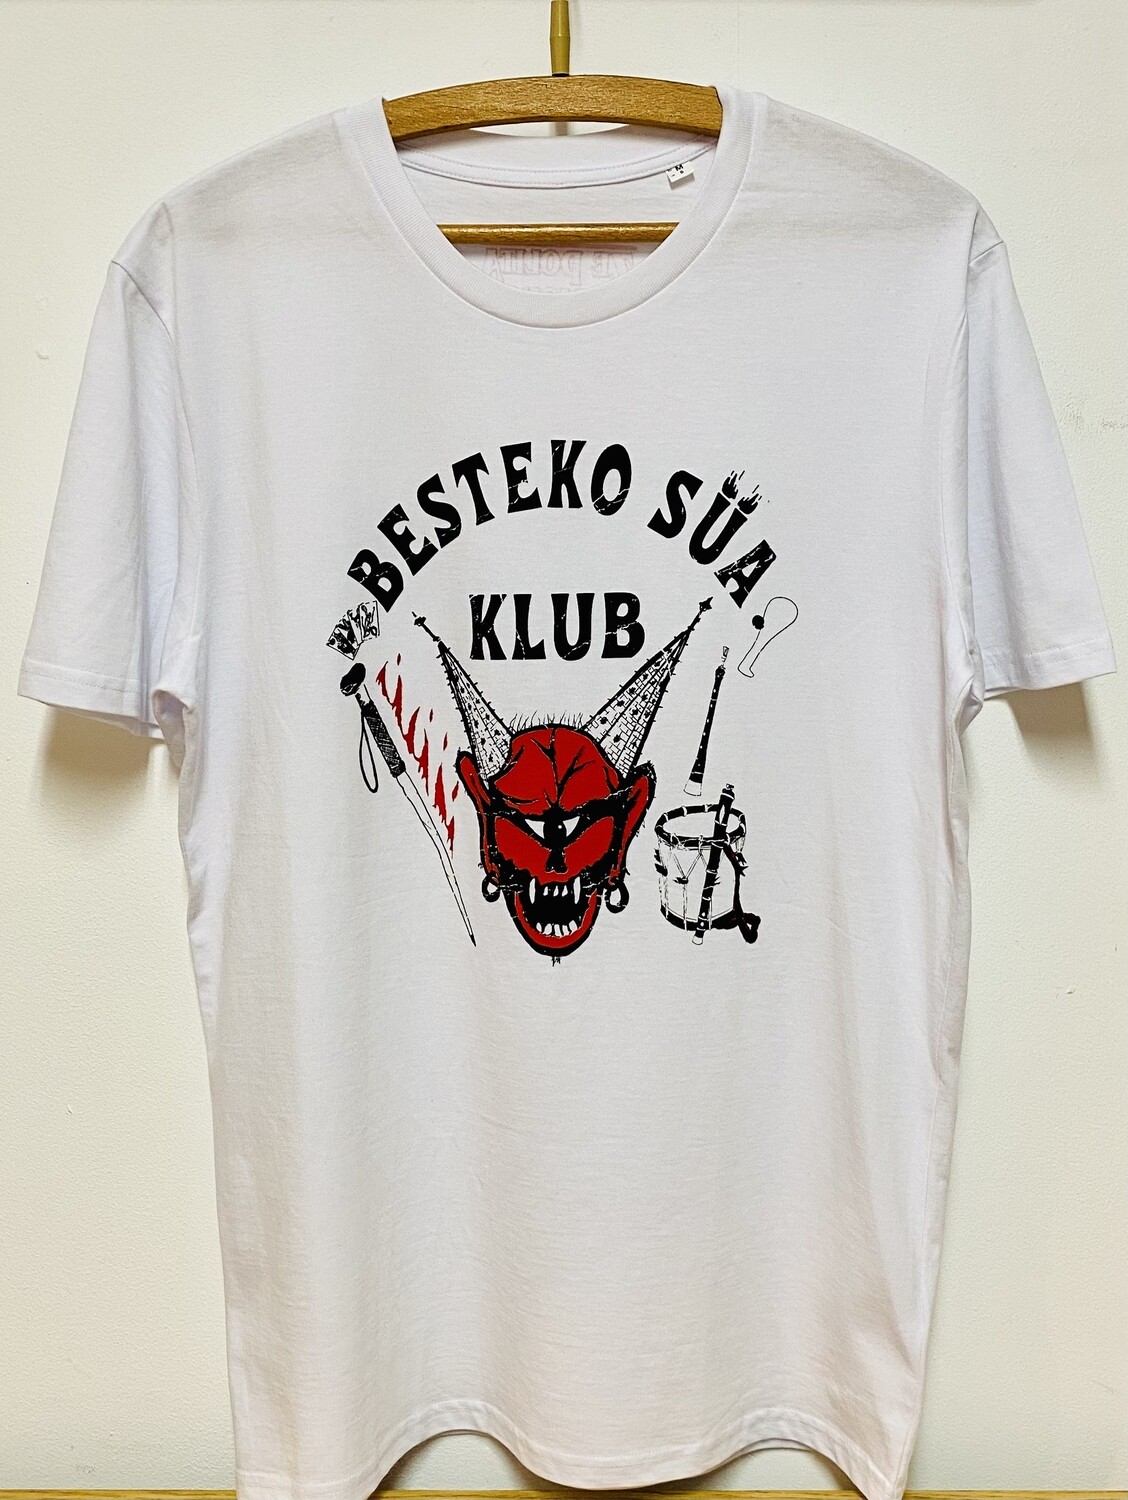 T-shirt Coton Bio - #BESTEKO SUA KLUB